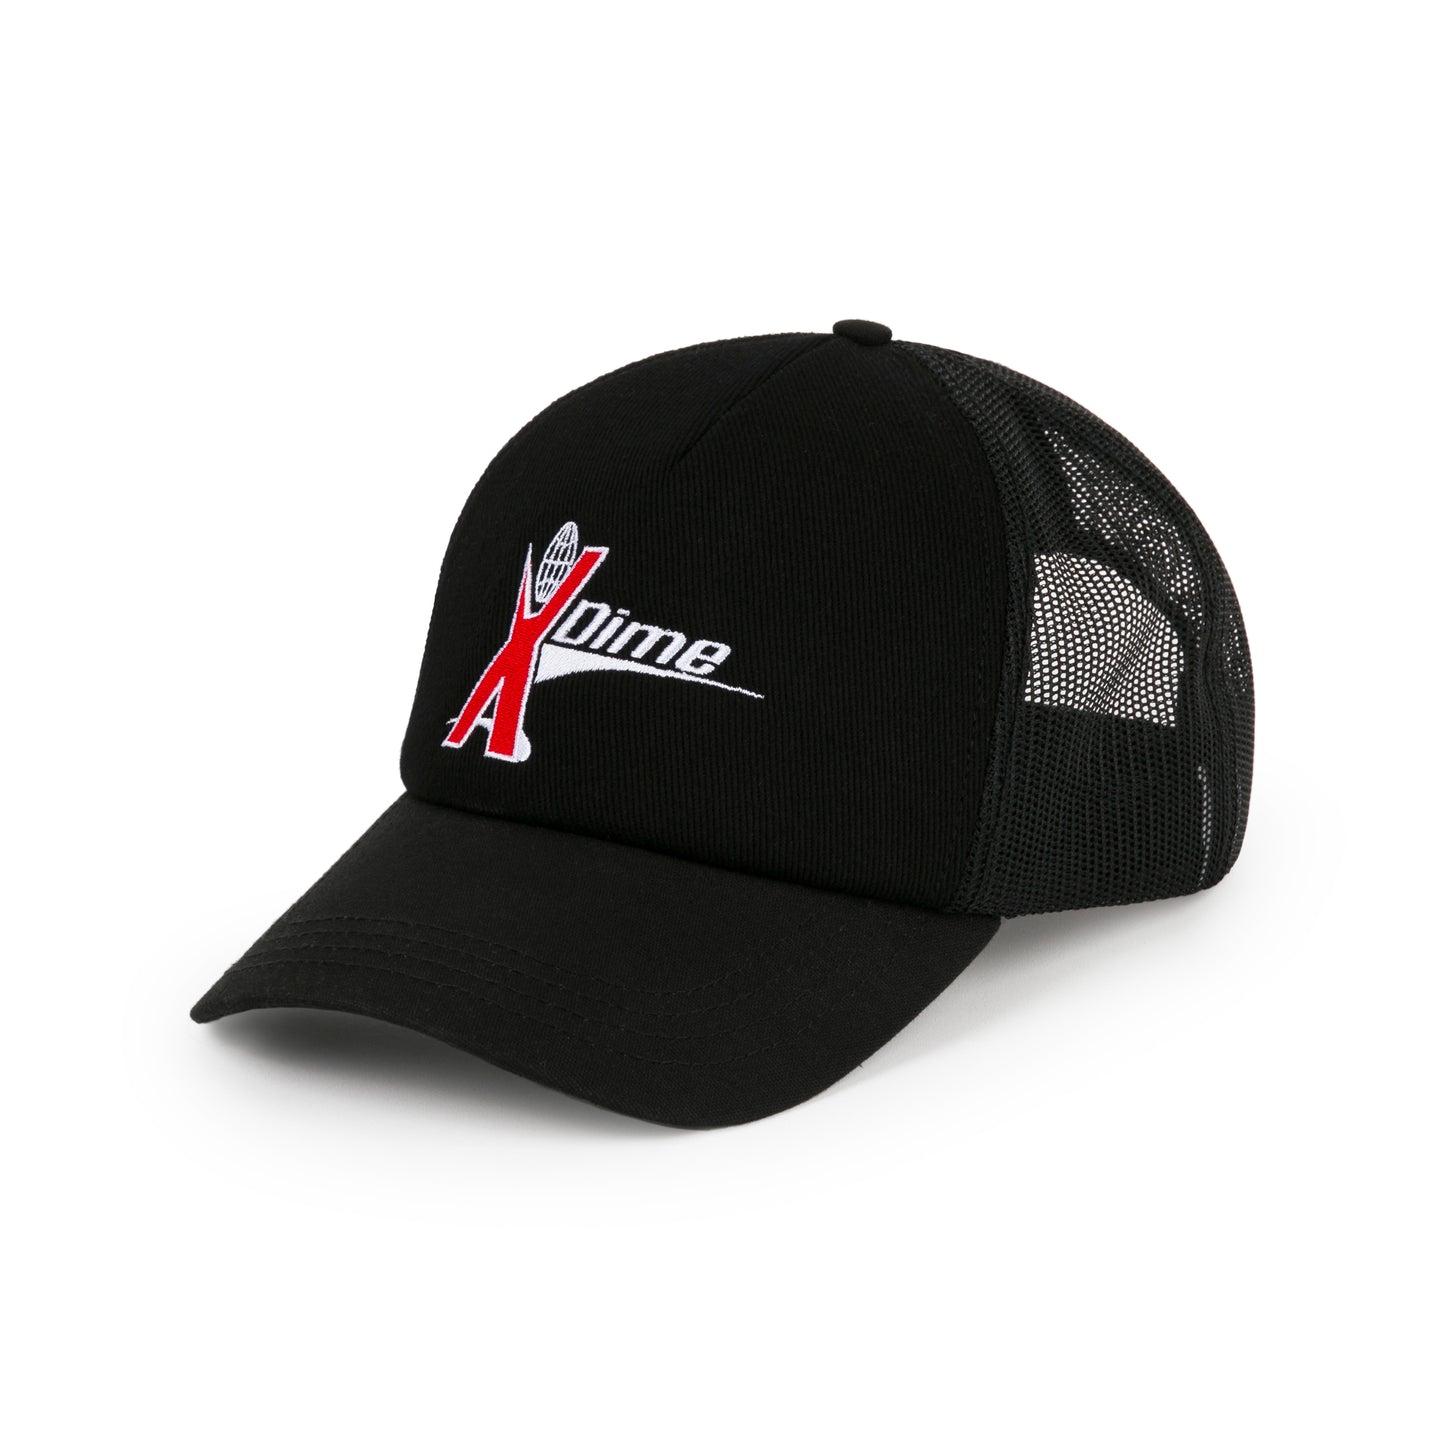 Dime 900 Trucker Hat - Black